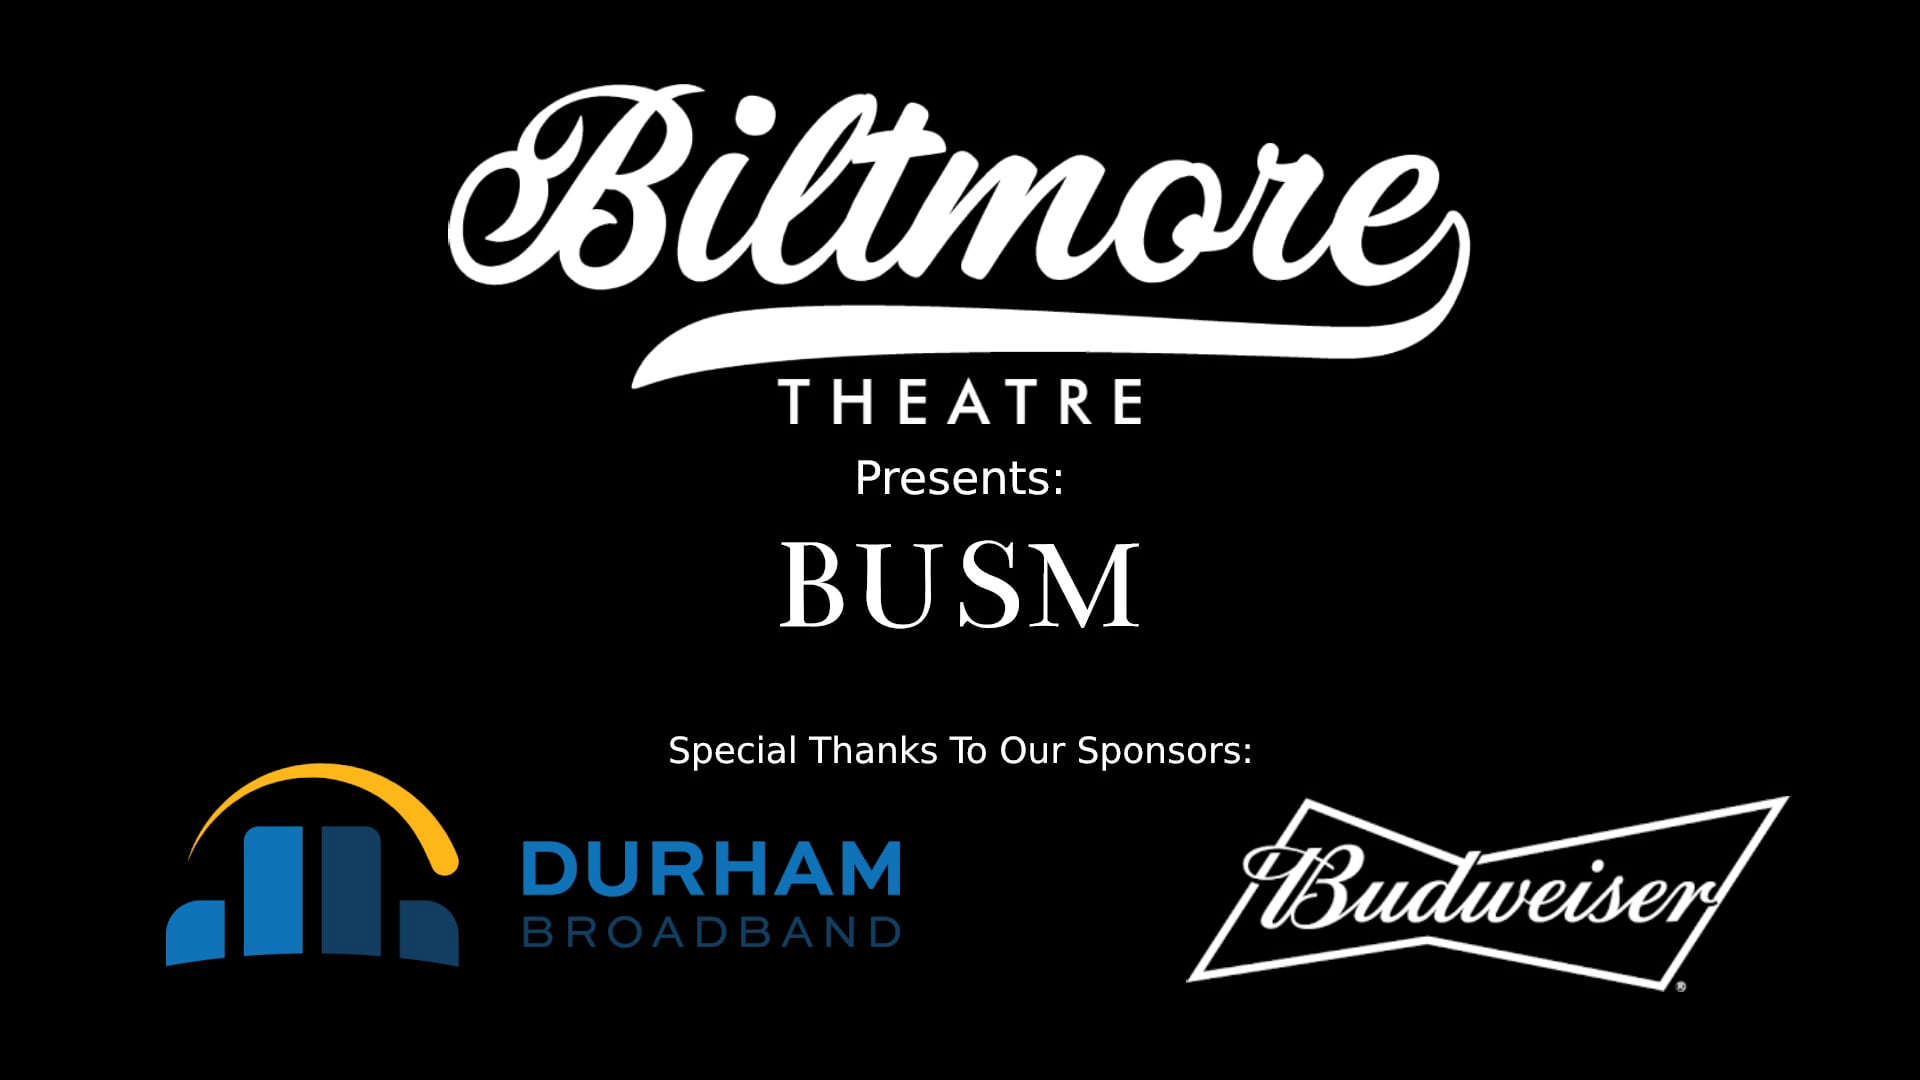 The Biltmore Presents BUSM